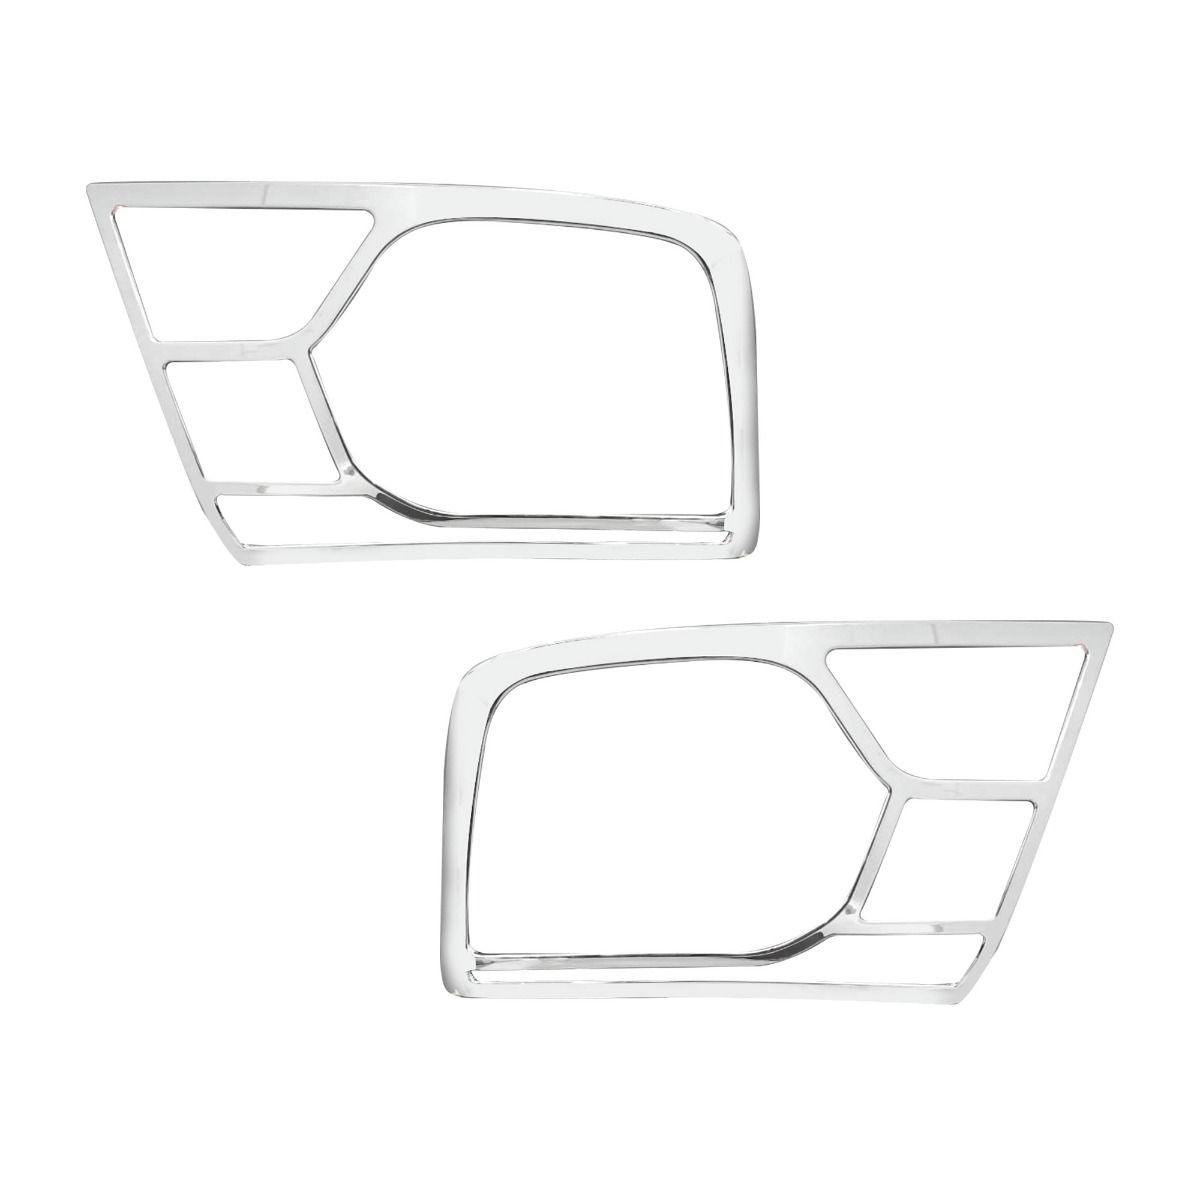 Galio Chrome finish Head Lamp Garnish Cover for Mahindra Bolero (2020 onwards) (Set of 2 Pcs.)